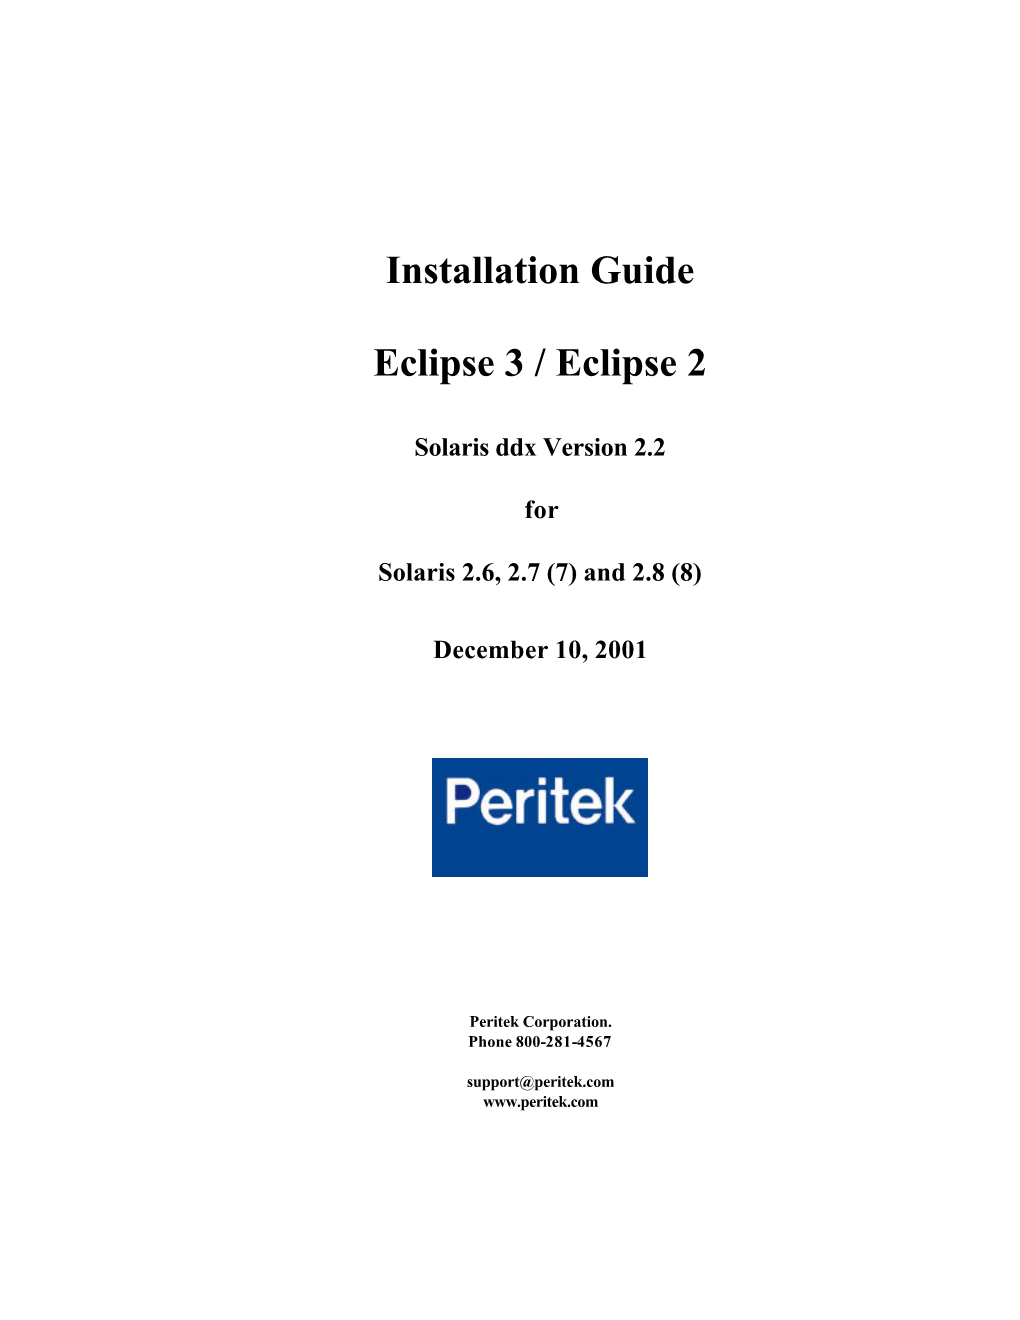 Installation Guide Eclipse 3 / Eclipse 2